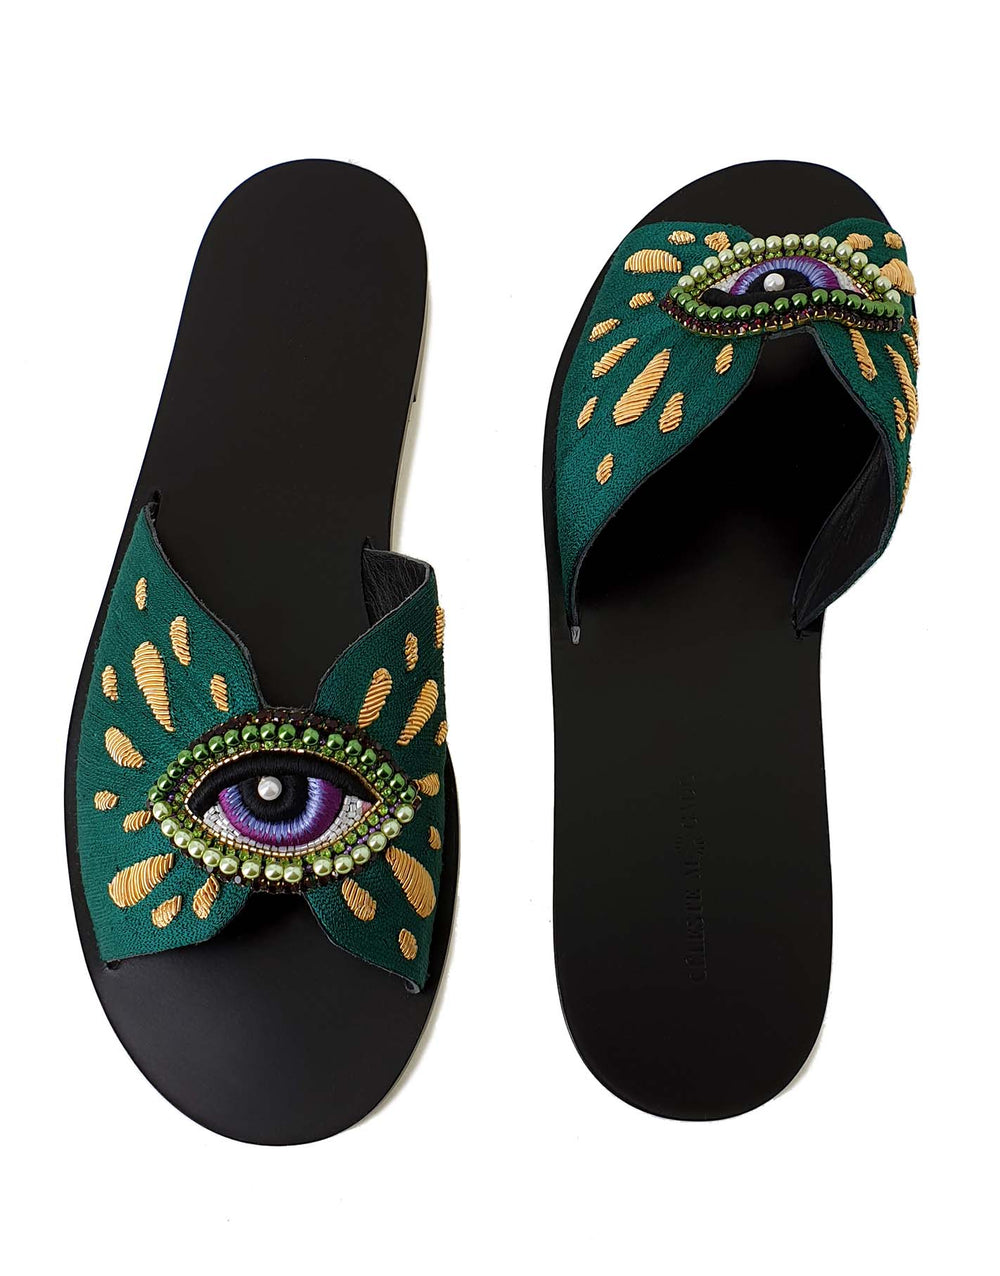 "Green eye" sandals